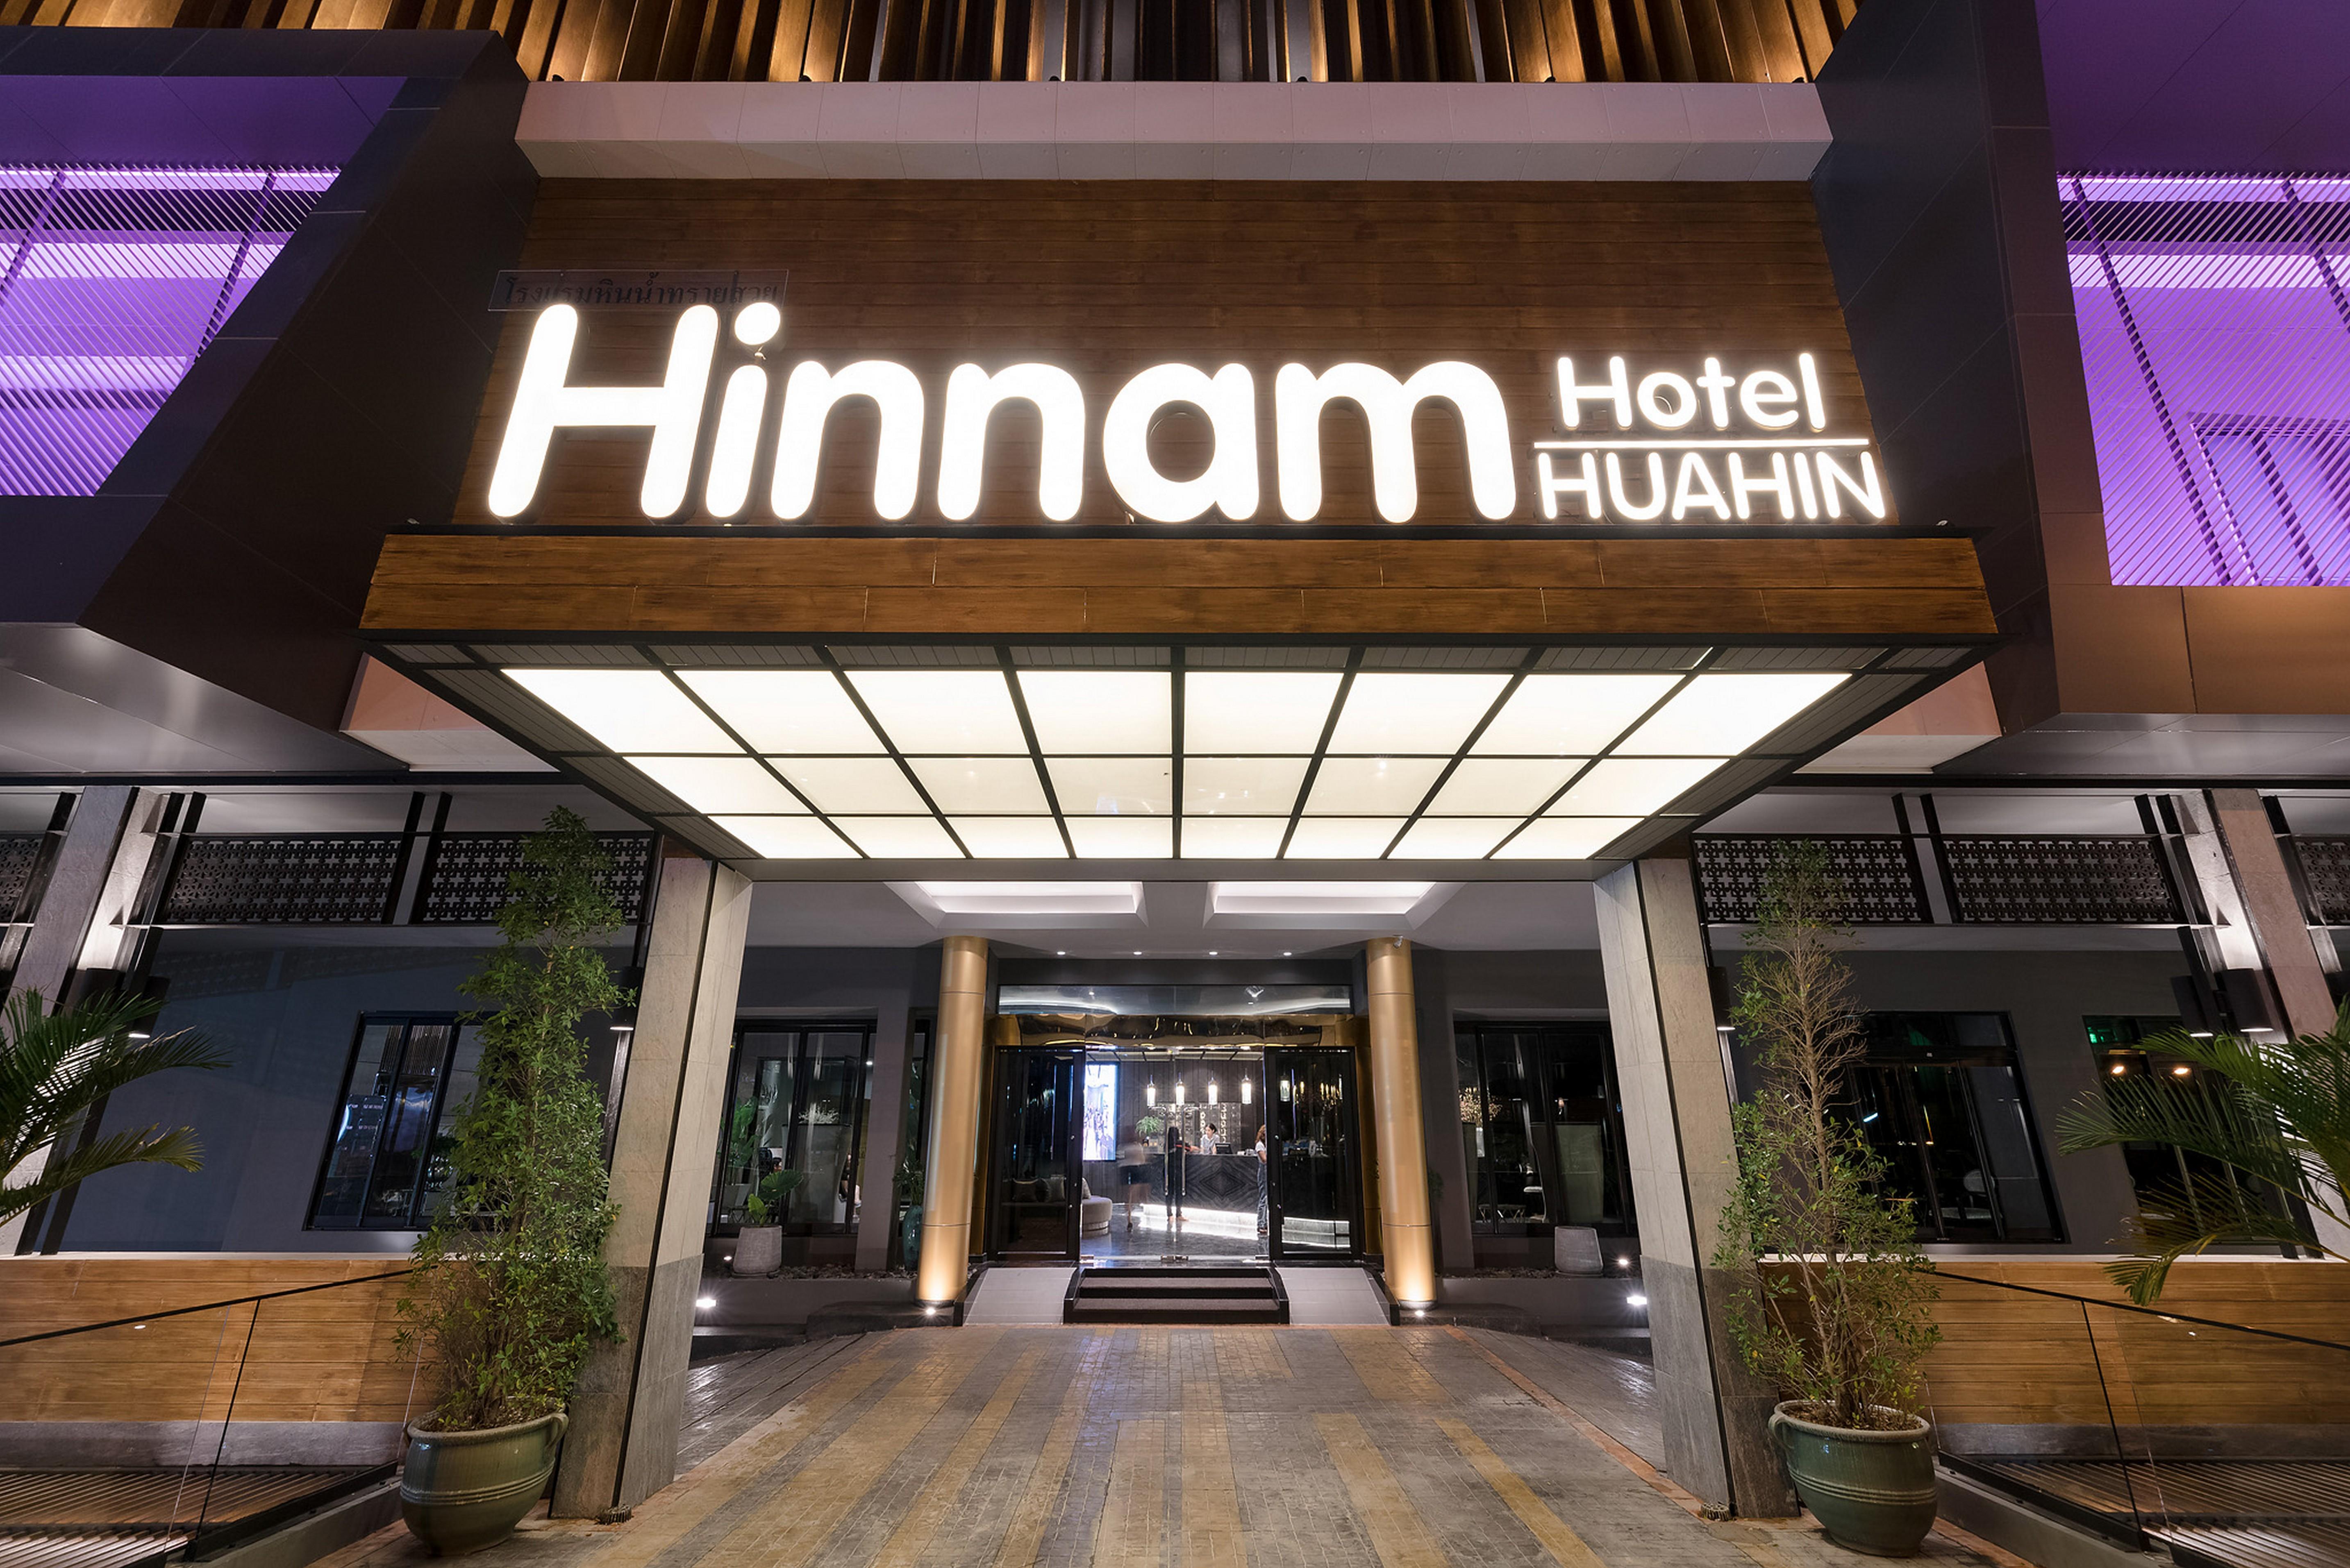 HINN NAMM HOTEL HUA HIN 4* (Thailand) - from US$ 47 | BOOKED